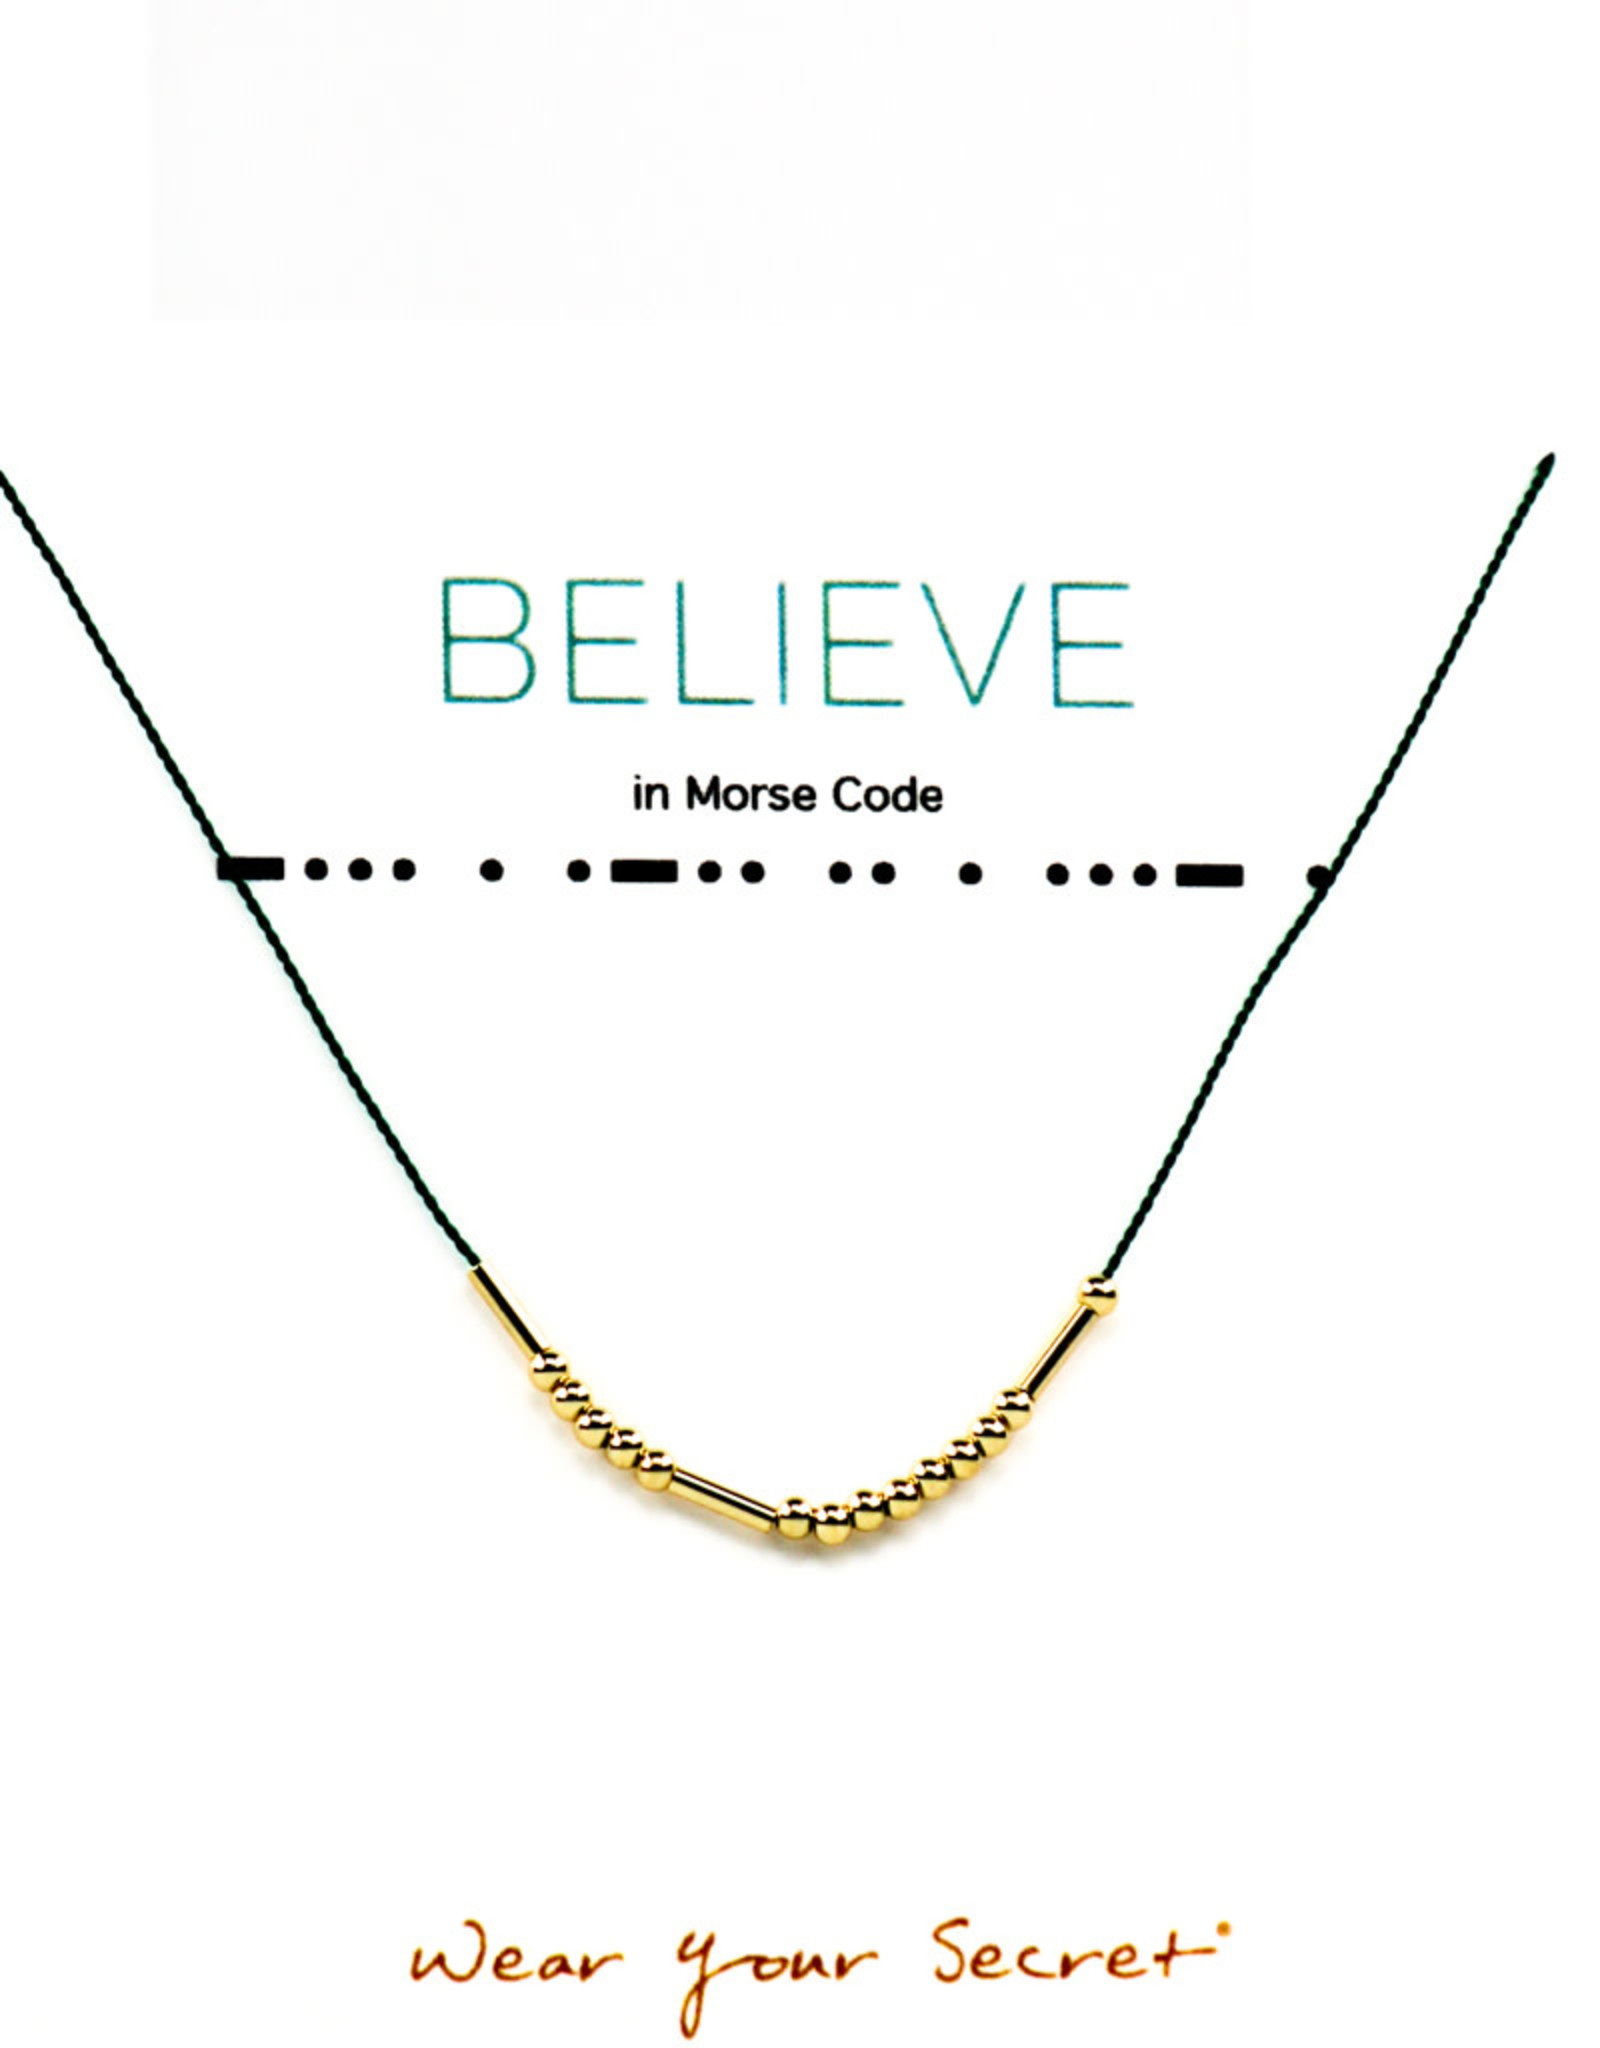 Little Be Design Morse Code "Believe" necklace